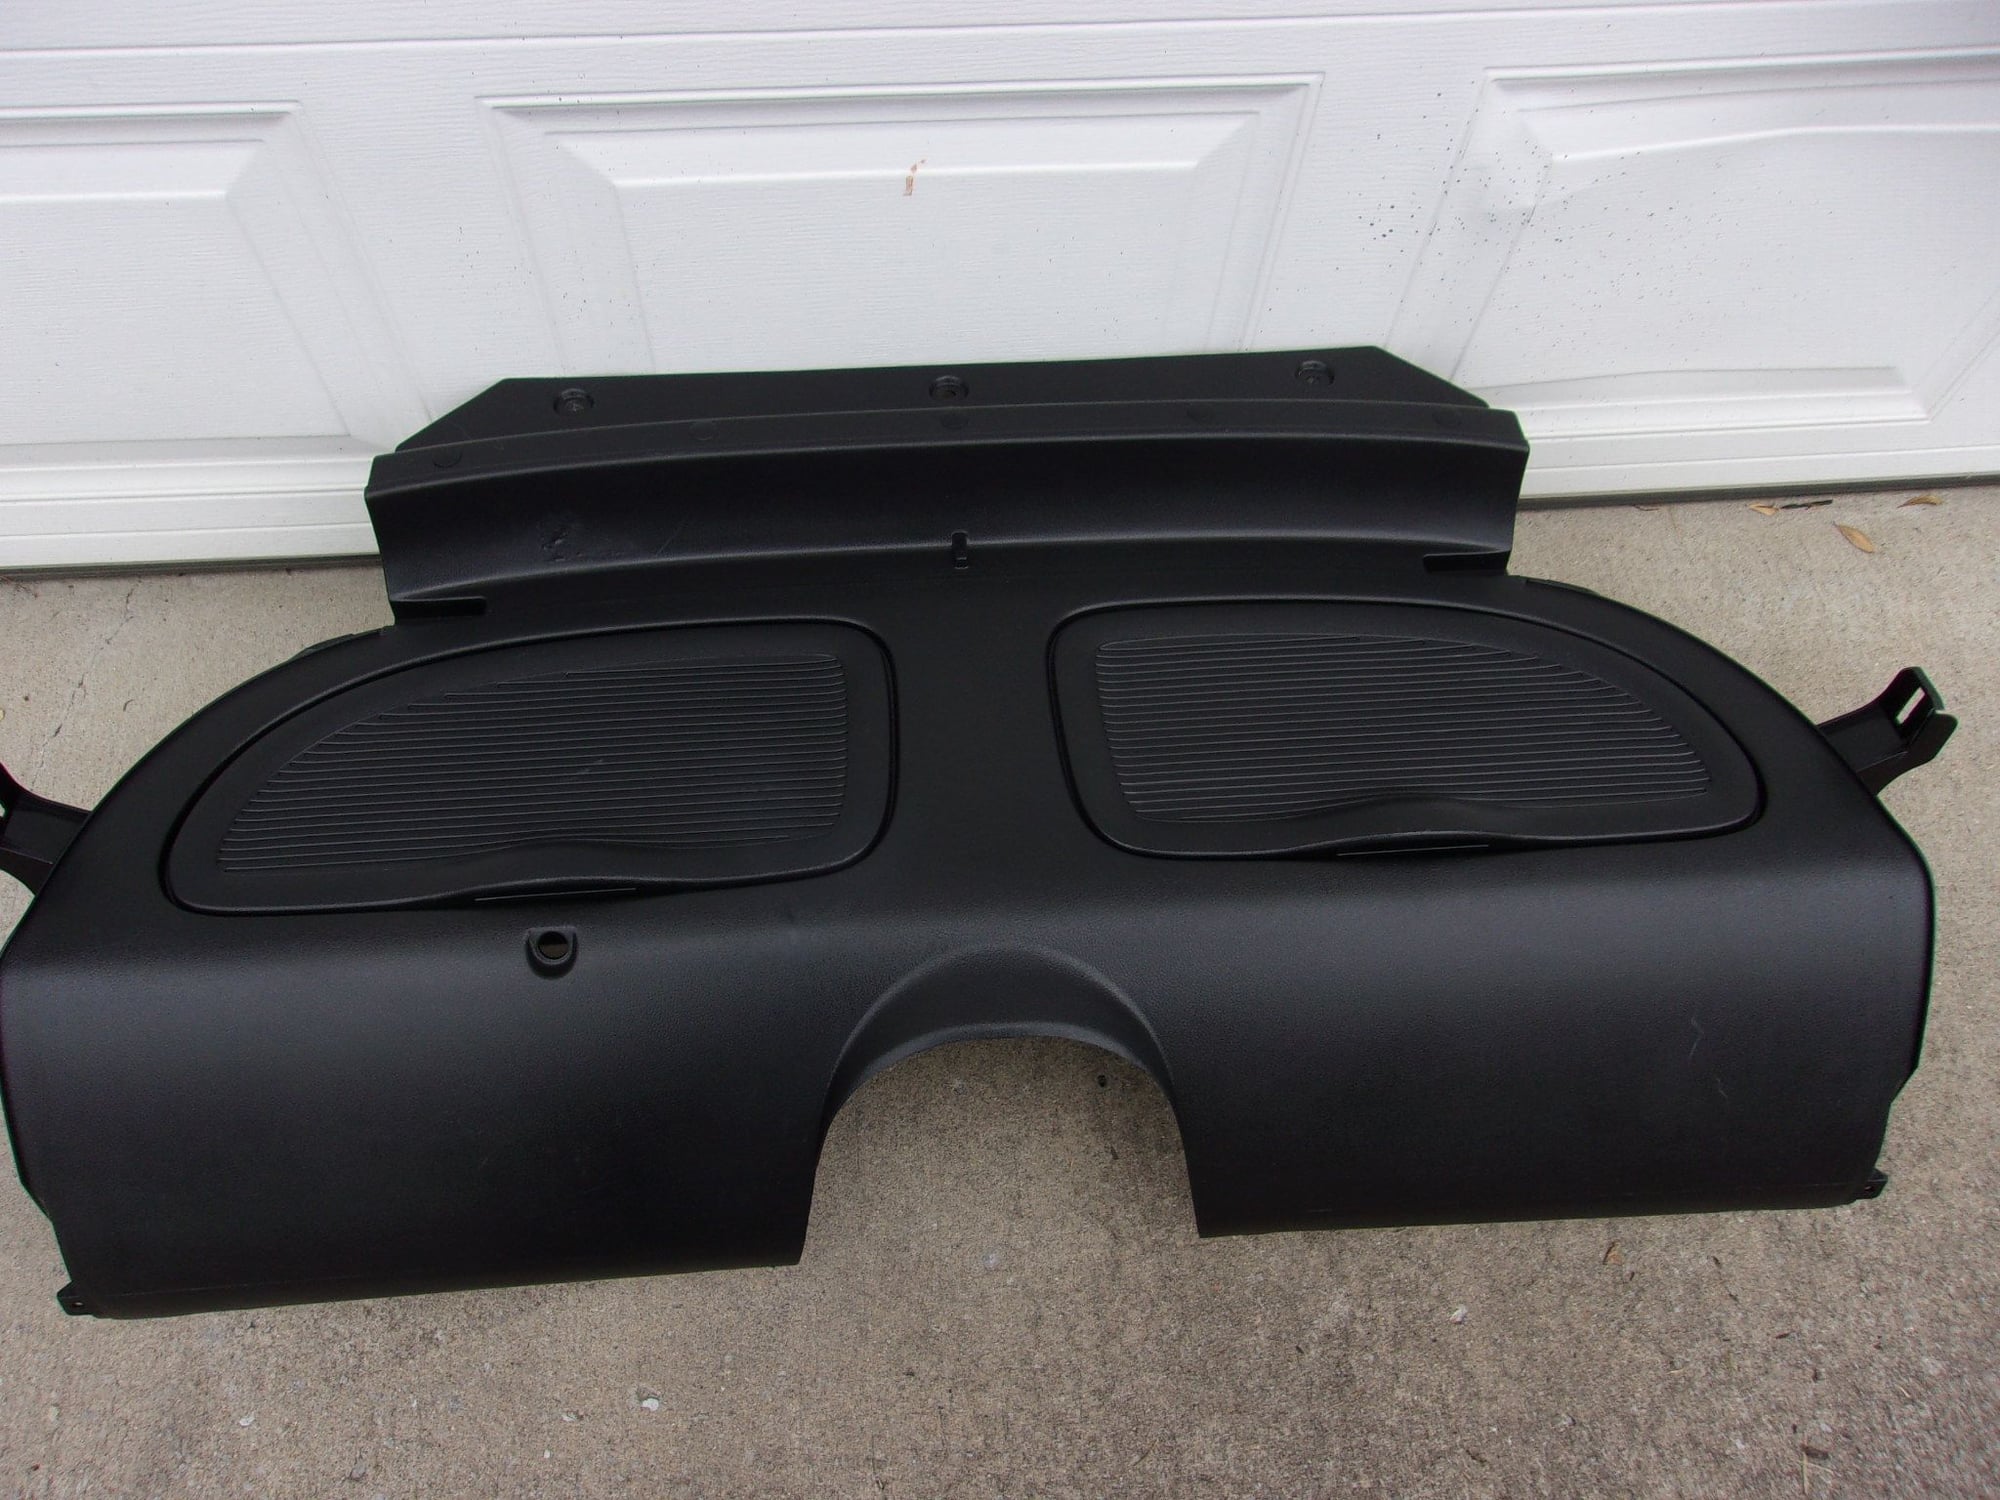 Interior/Upholstery - Black Bins - Used - 1993 to 1995 Mazda RX-7 - Murfreesboro, TN 37130, United States